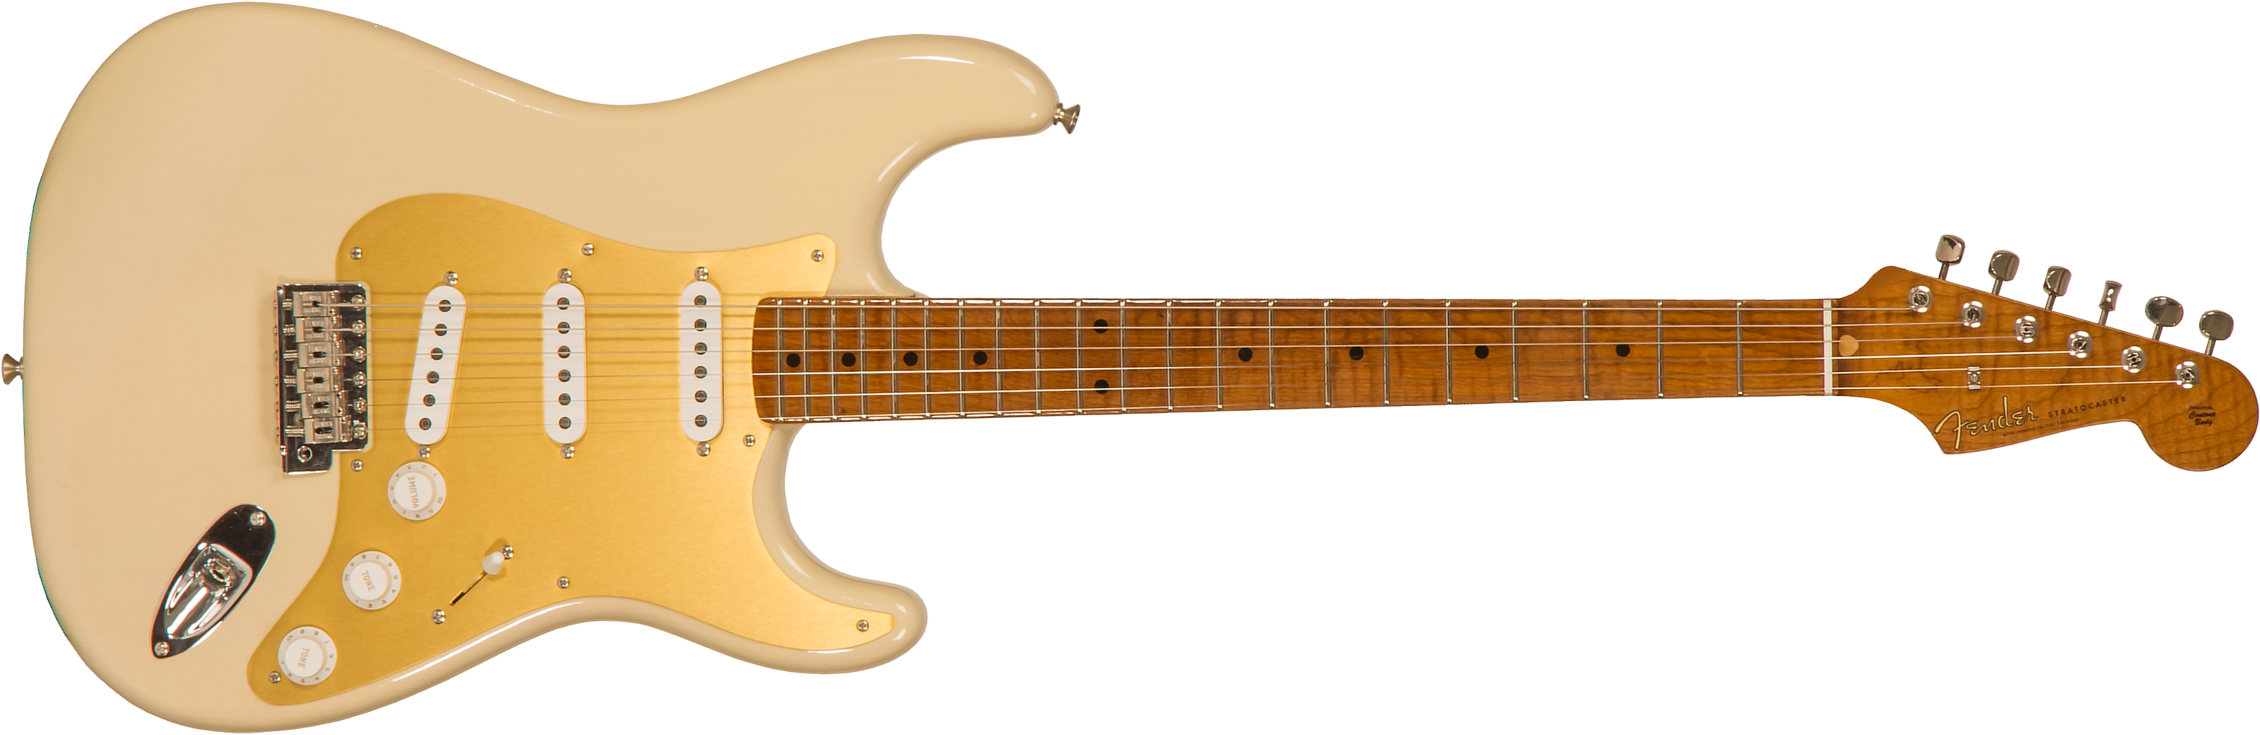 Fender Custom Shop Strat 1957 3s Trem Mn #r116646 - Lush Closet Classic Vintage Blonde - E-Gitarre in Str-Form - Main picture